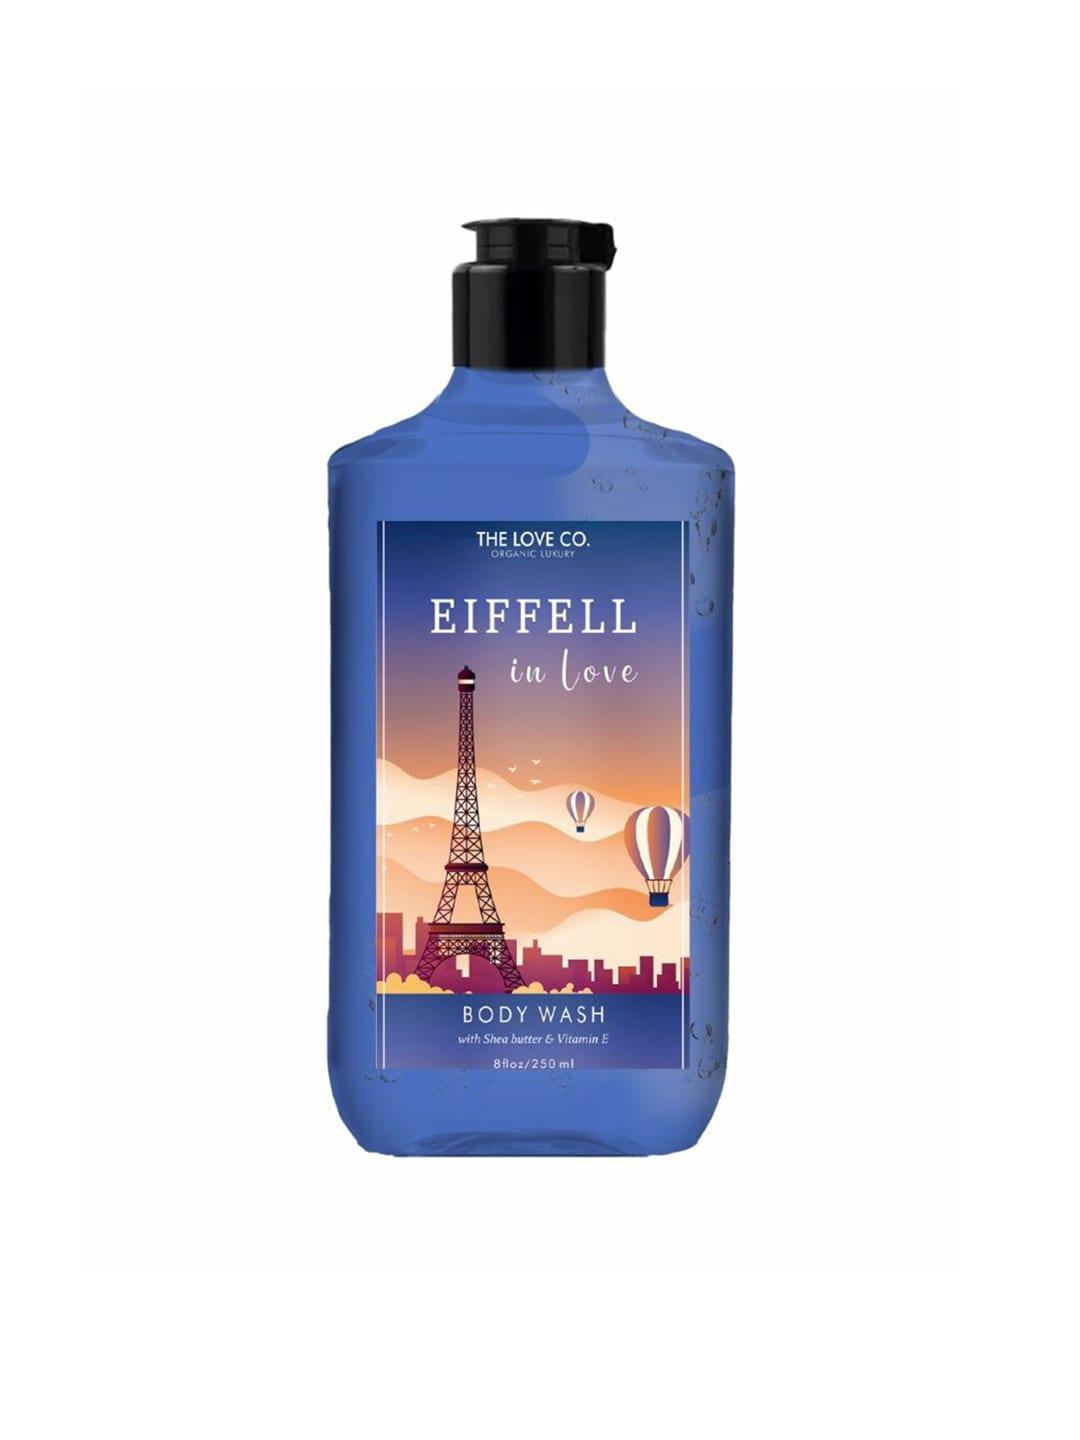 THE LOVE CO. Eiffell In Love Body Wash with Shea Butter & Vitamin E 250ml